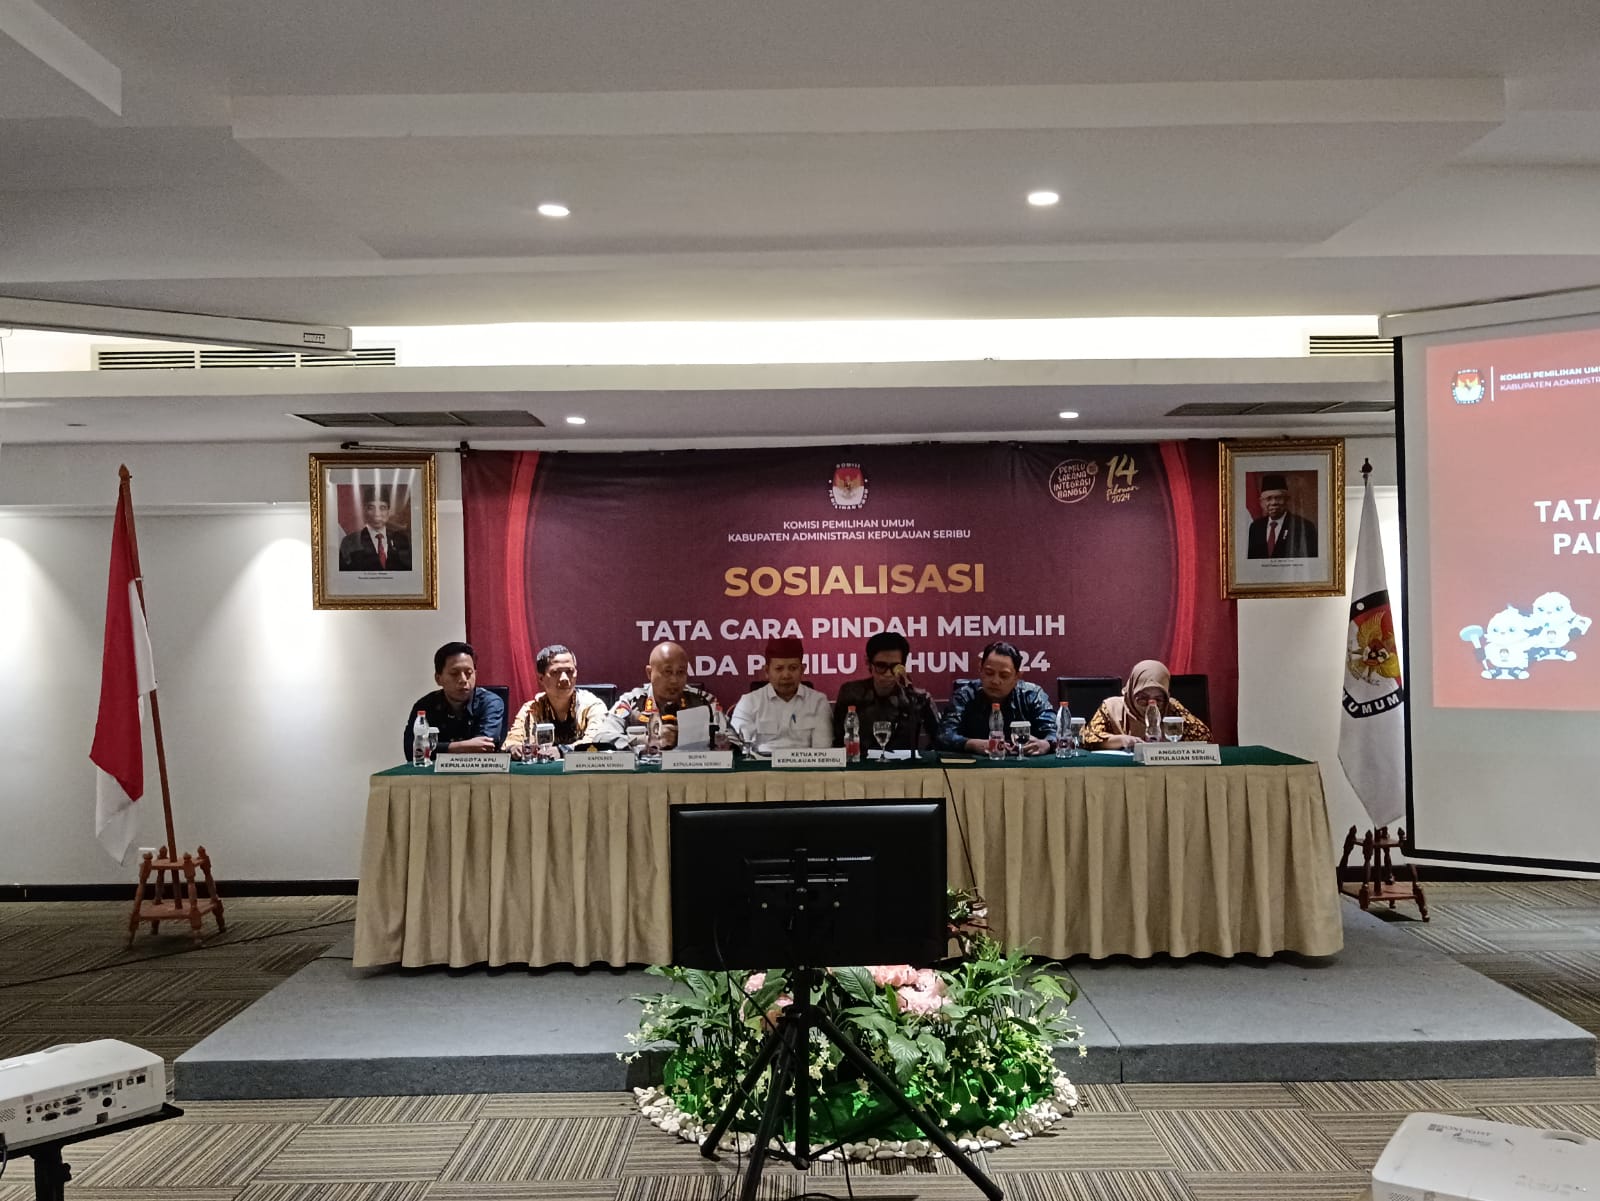 Kapolres Kepulauan Seribu Menghadiri Acara Sosialisasi Pindah Pemilih Pemilu 2024 untuk Suksesnya Proses Demokrasi